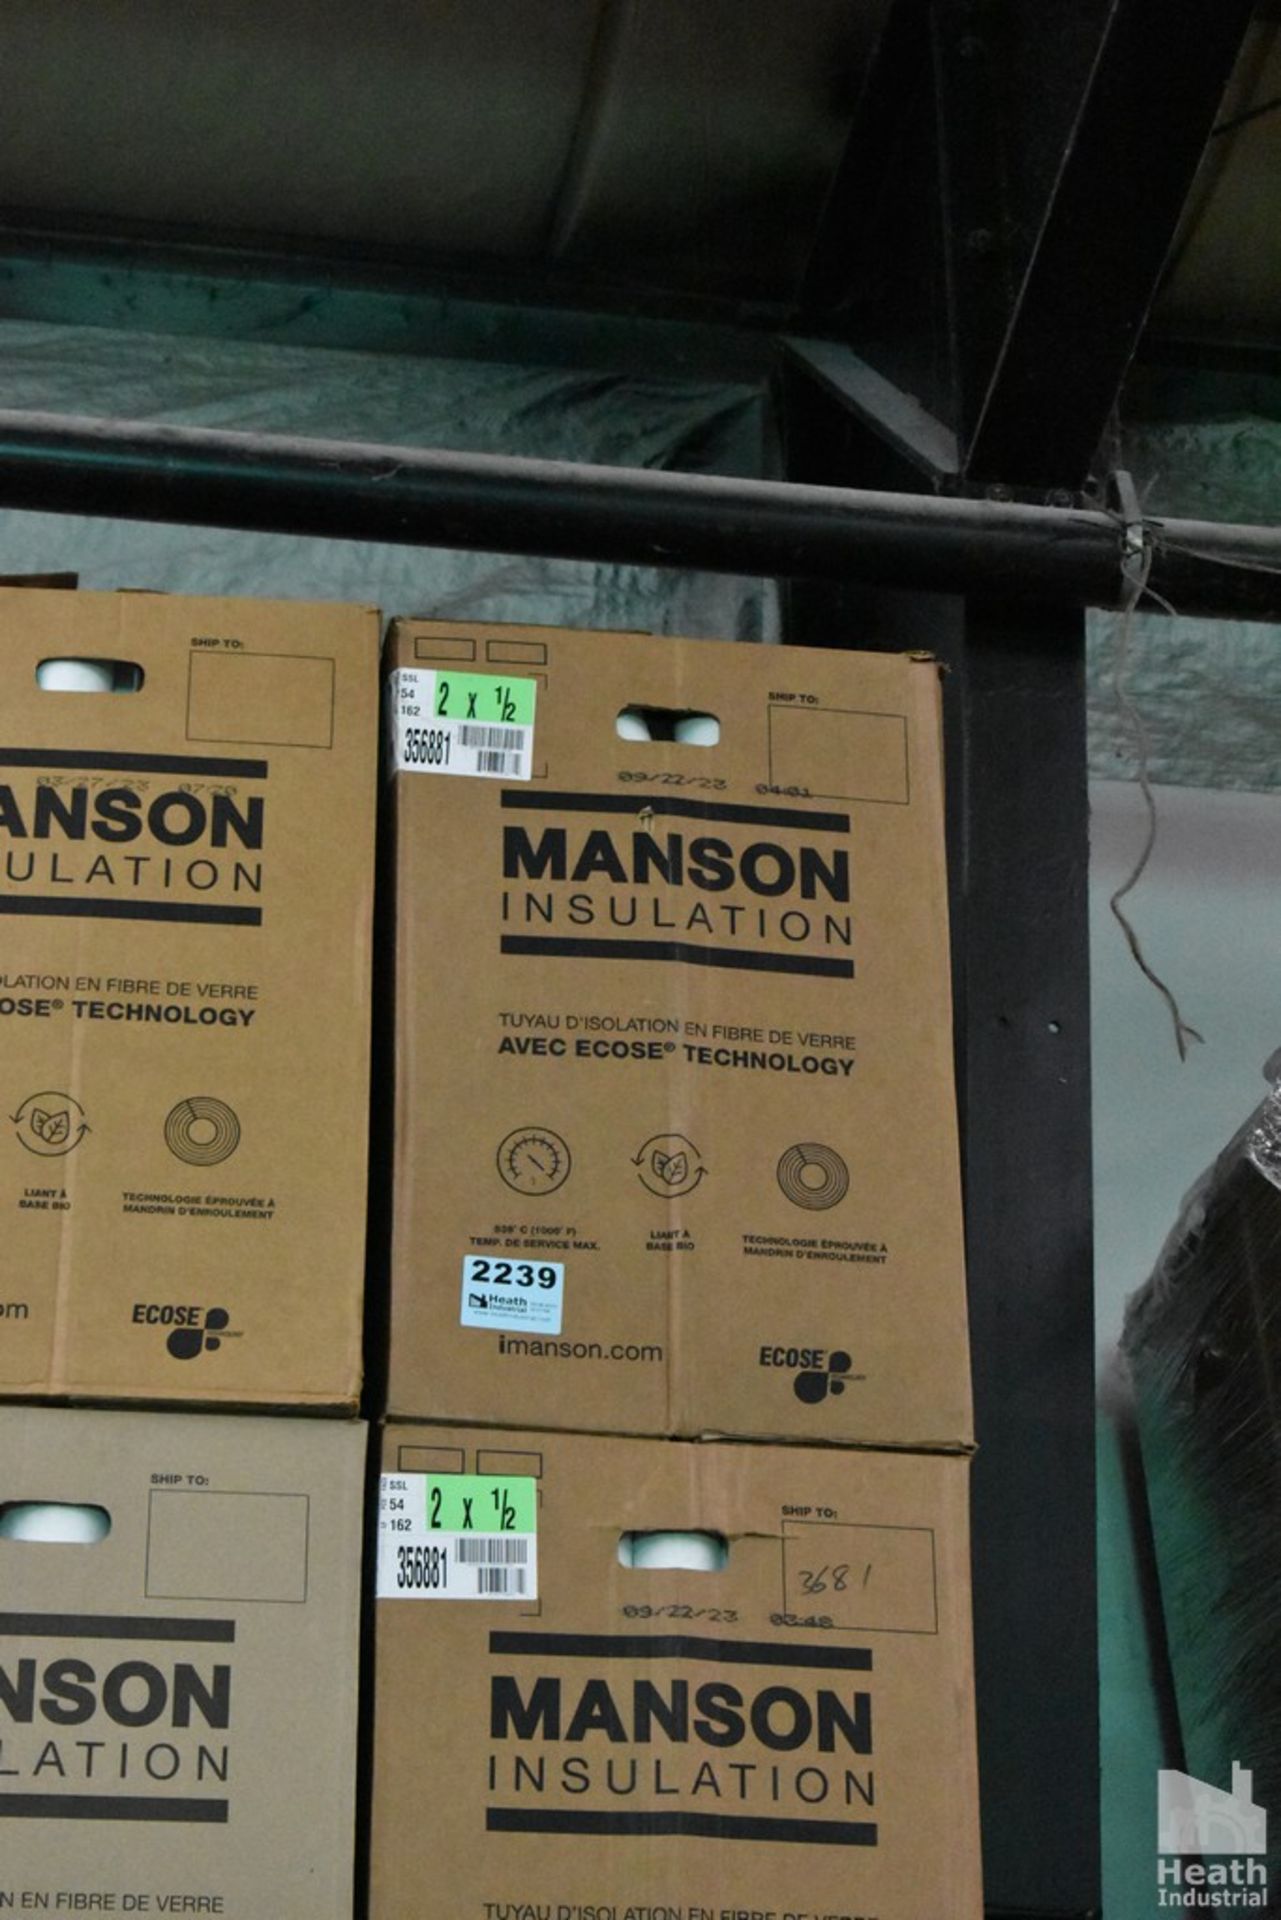 CASE OF MANSON INSULATION, 2 X 1/2, NEW IN BOX, NO. 356881